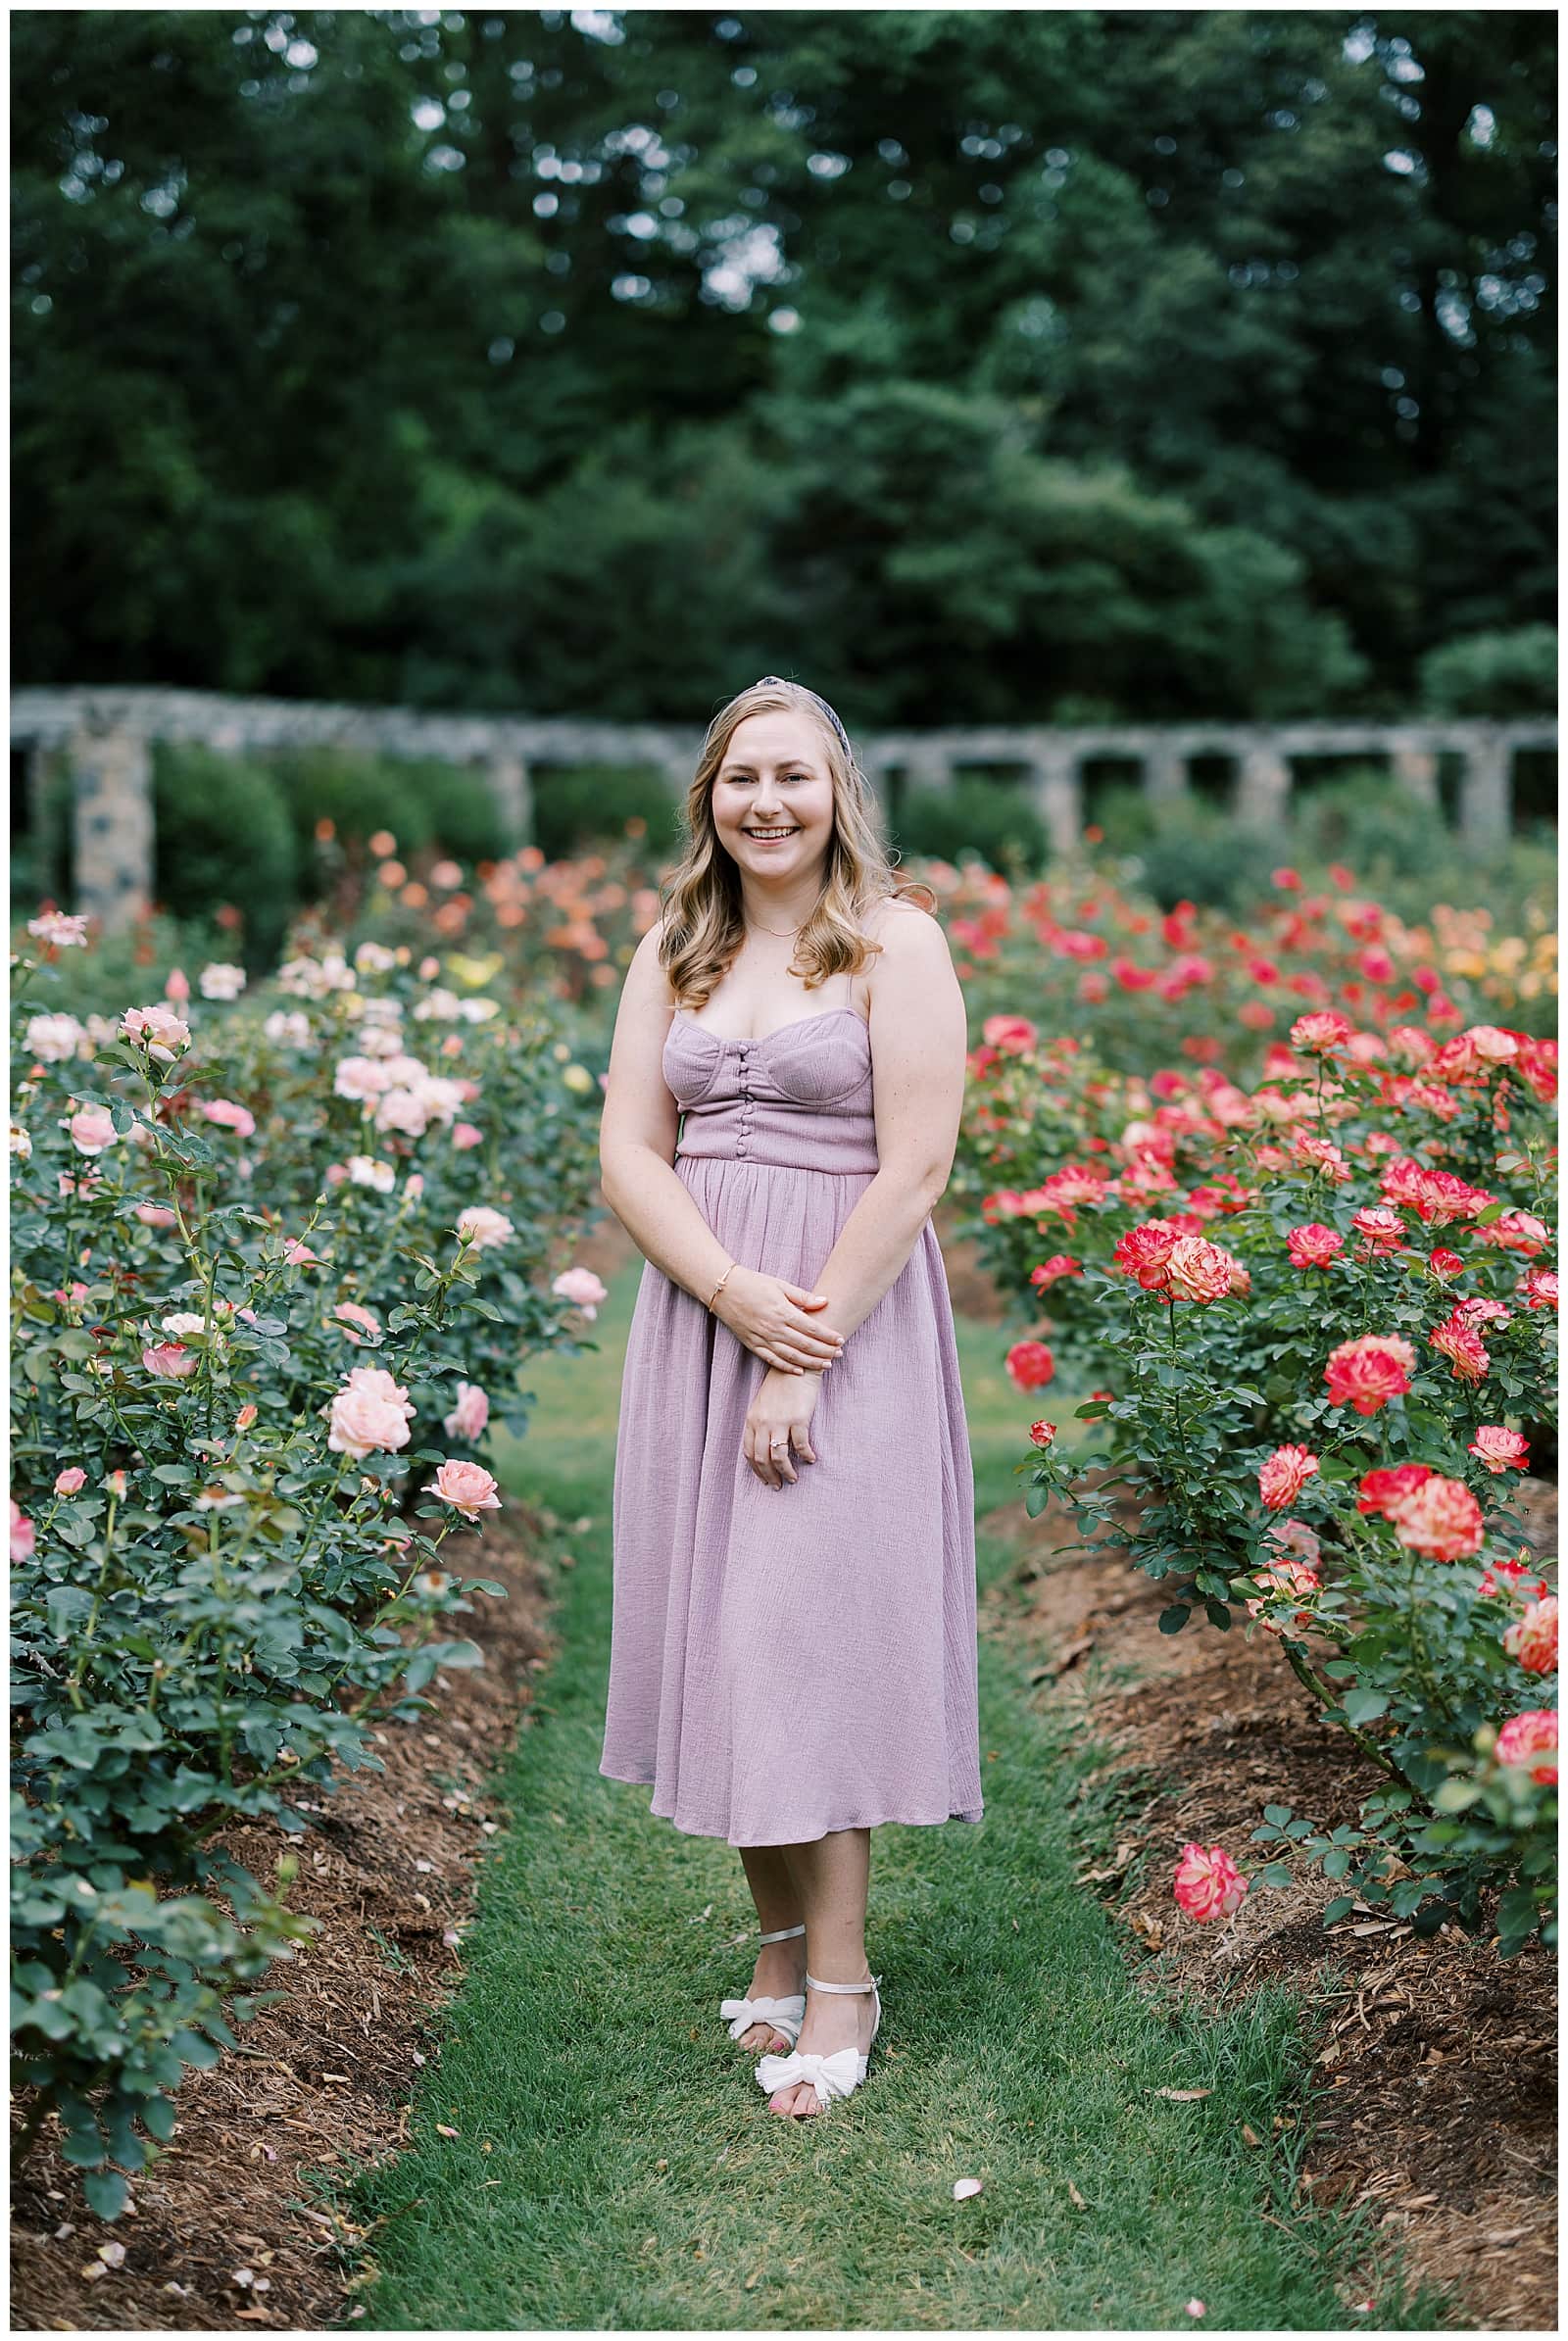 Danielle-Defayette-Photography-Raleigh-Rose-Garden-Engagement-Photos_0016.jpg